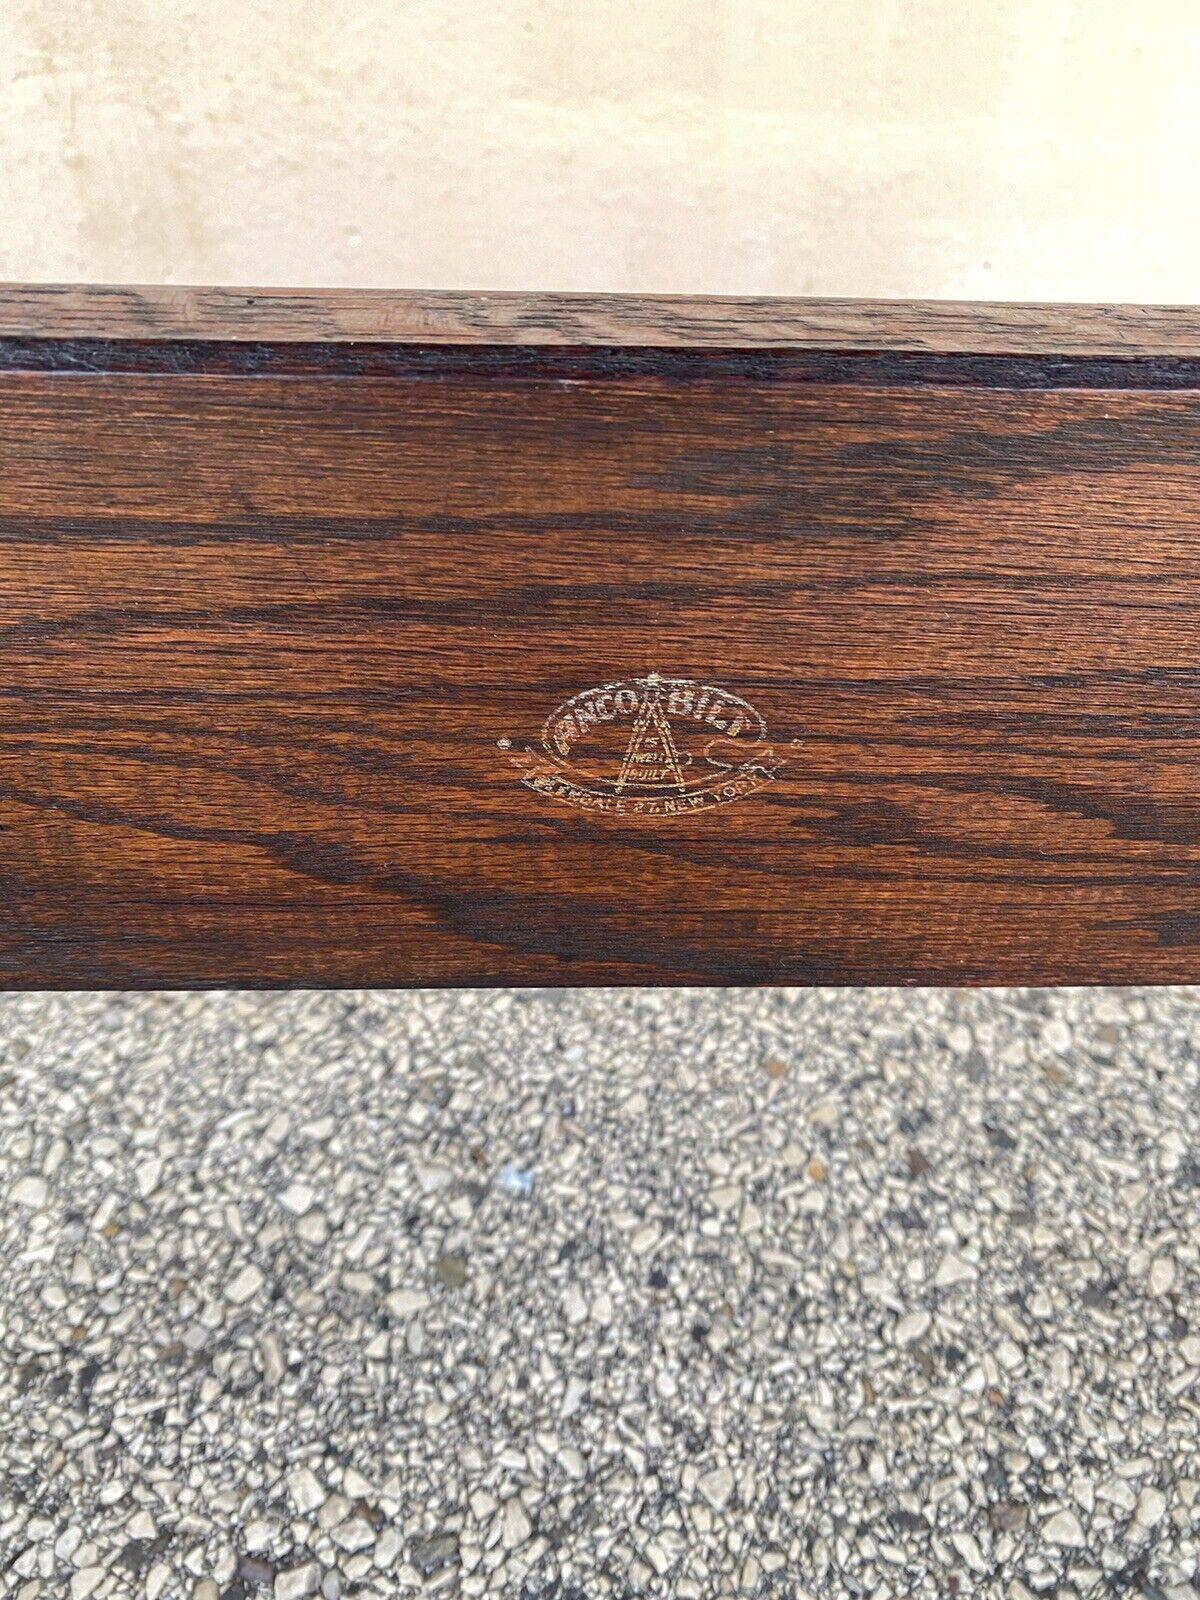 Vintage Anco Bilt Oak Wood Adjustable Drafting Table Desk Industrial Work Stand 1